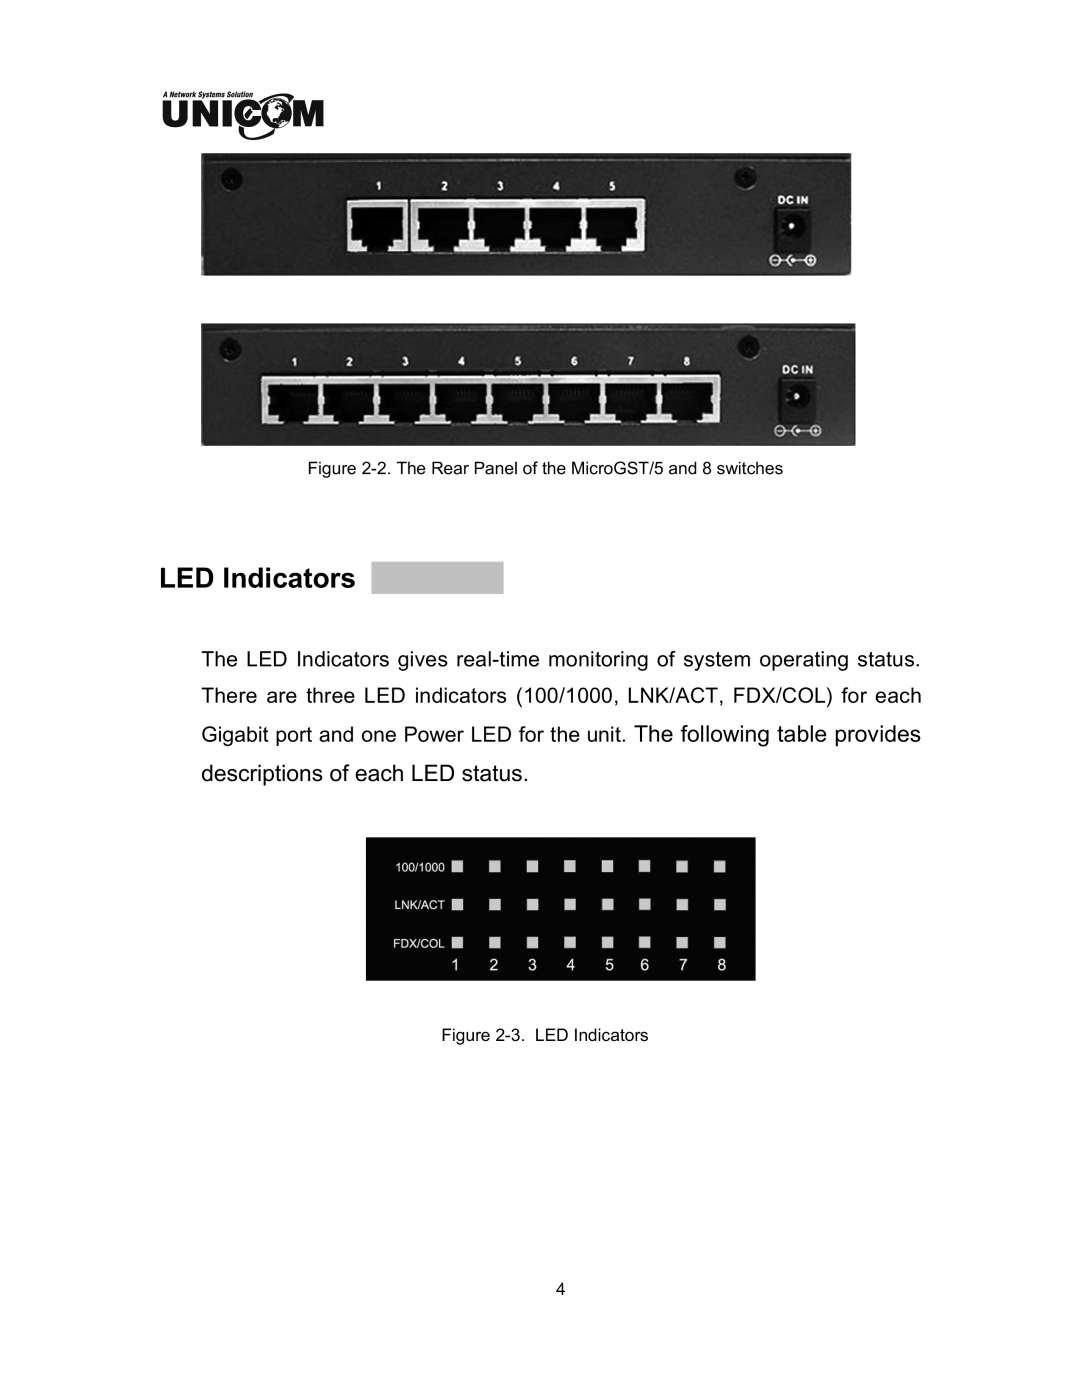 UNICOM Electric GEP-32008T, GEP-32005T specifications descriptions of each LED status, 3. LED Indicators 